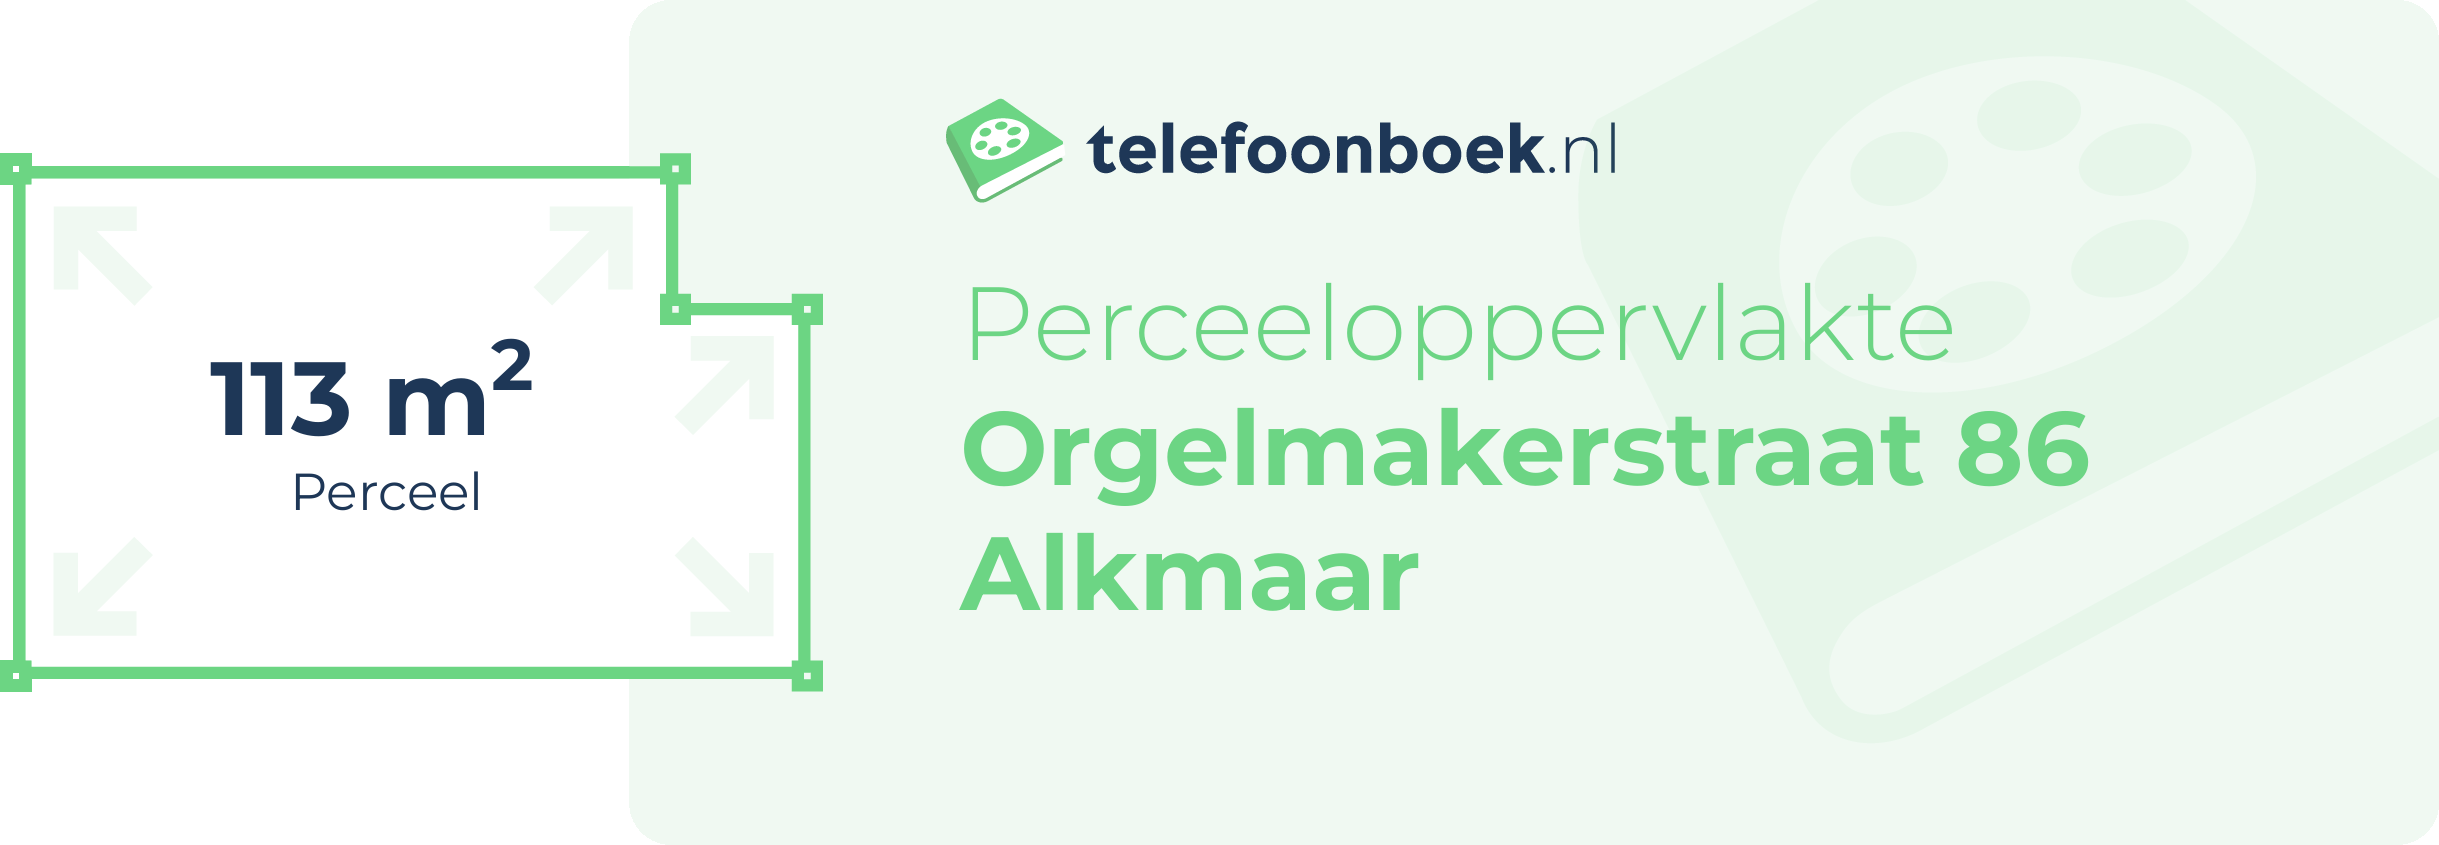 Perceeloppervlakte Orgelmakerstraat 86 Alkmaar